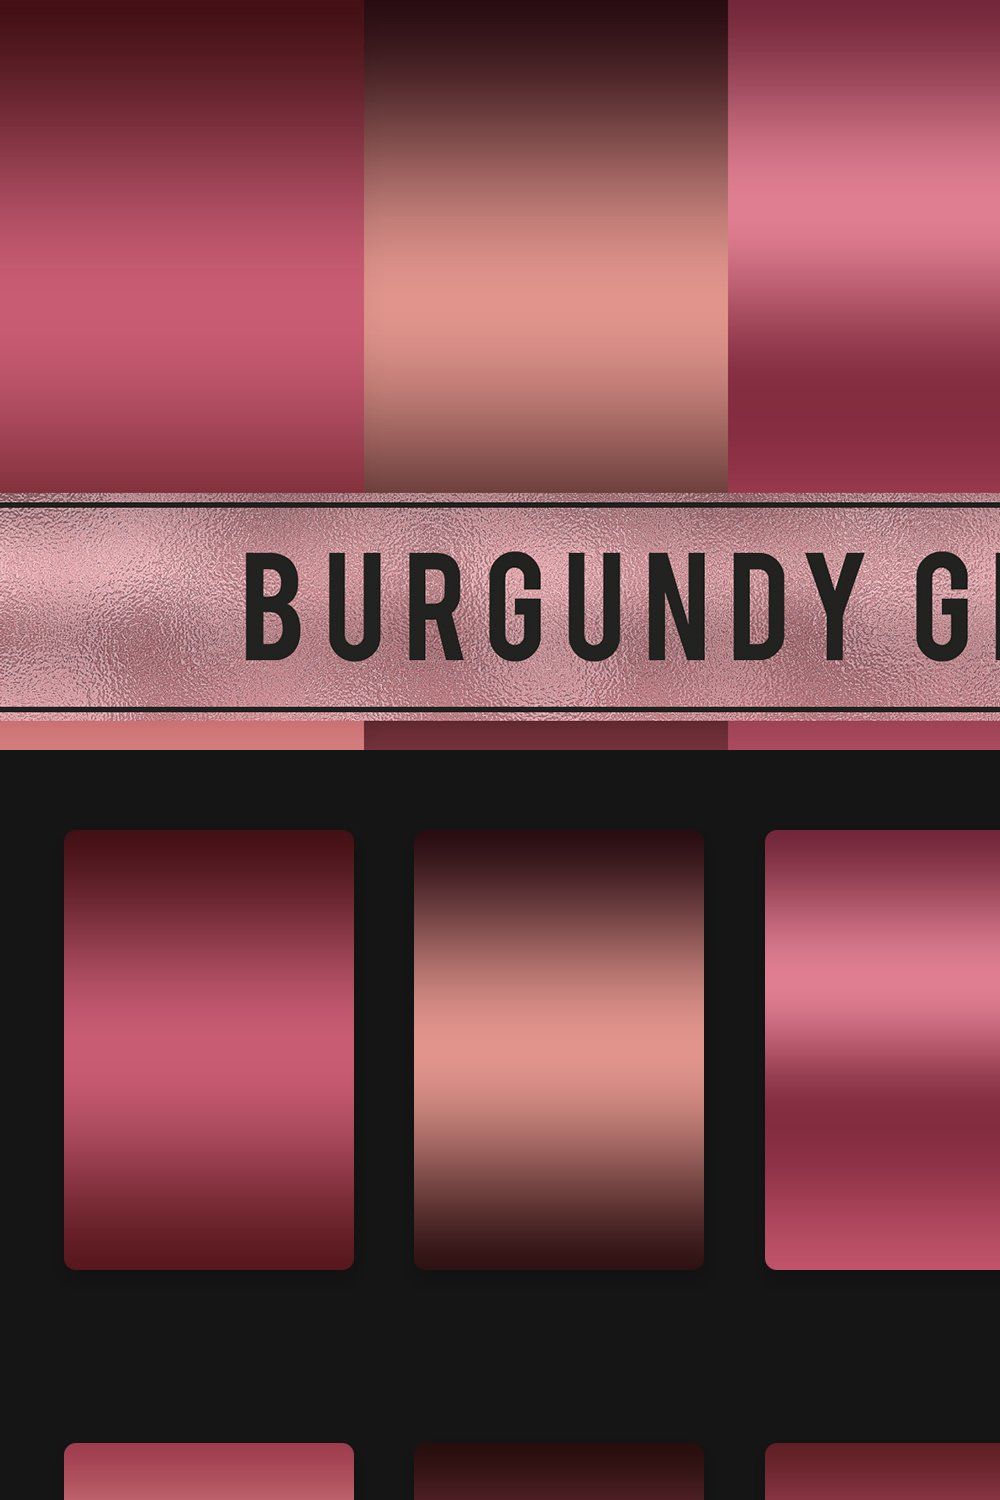 Burgundy Gradients pinterest preview image.